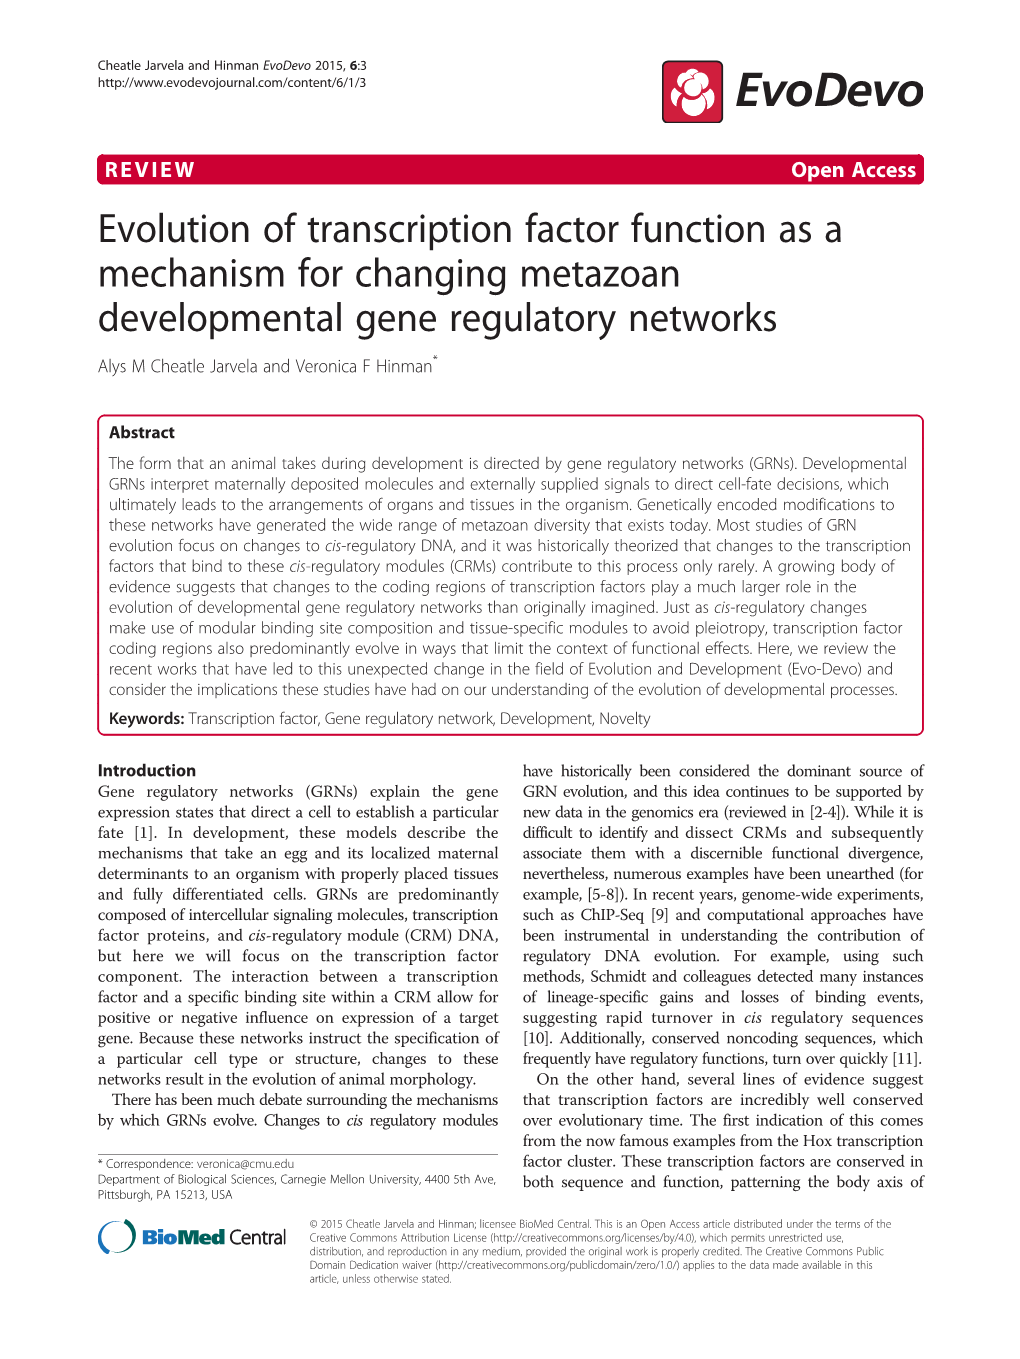 Evolution of Transcription Factor Function As a Mechanism for Changing Metazoan Developmental Gene Regulatory Networks Alys M Cheatle Jarvela and Veronica F Hinman*